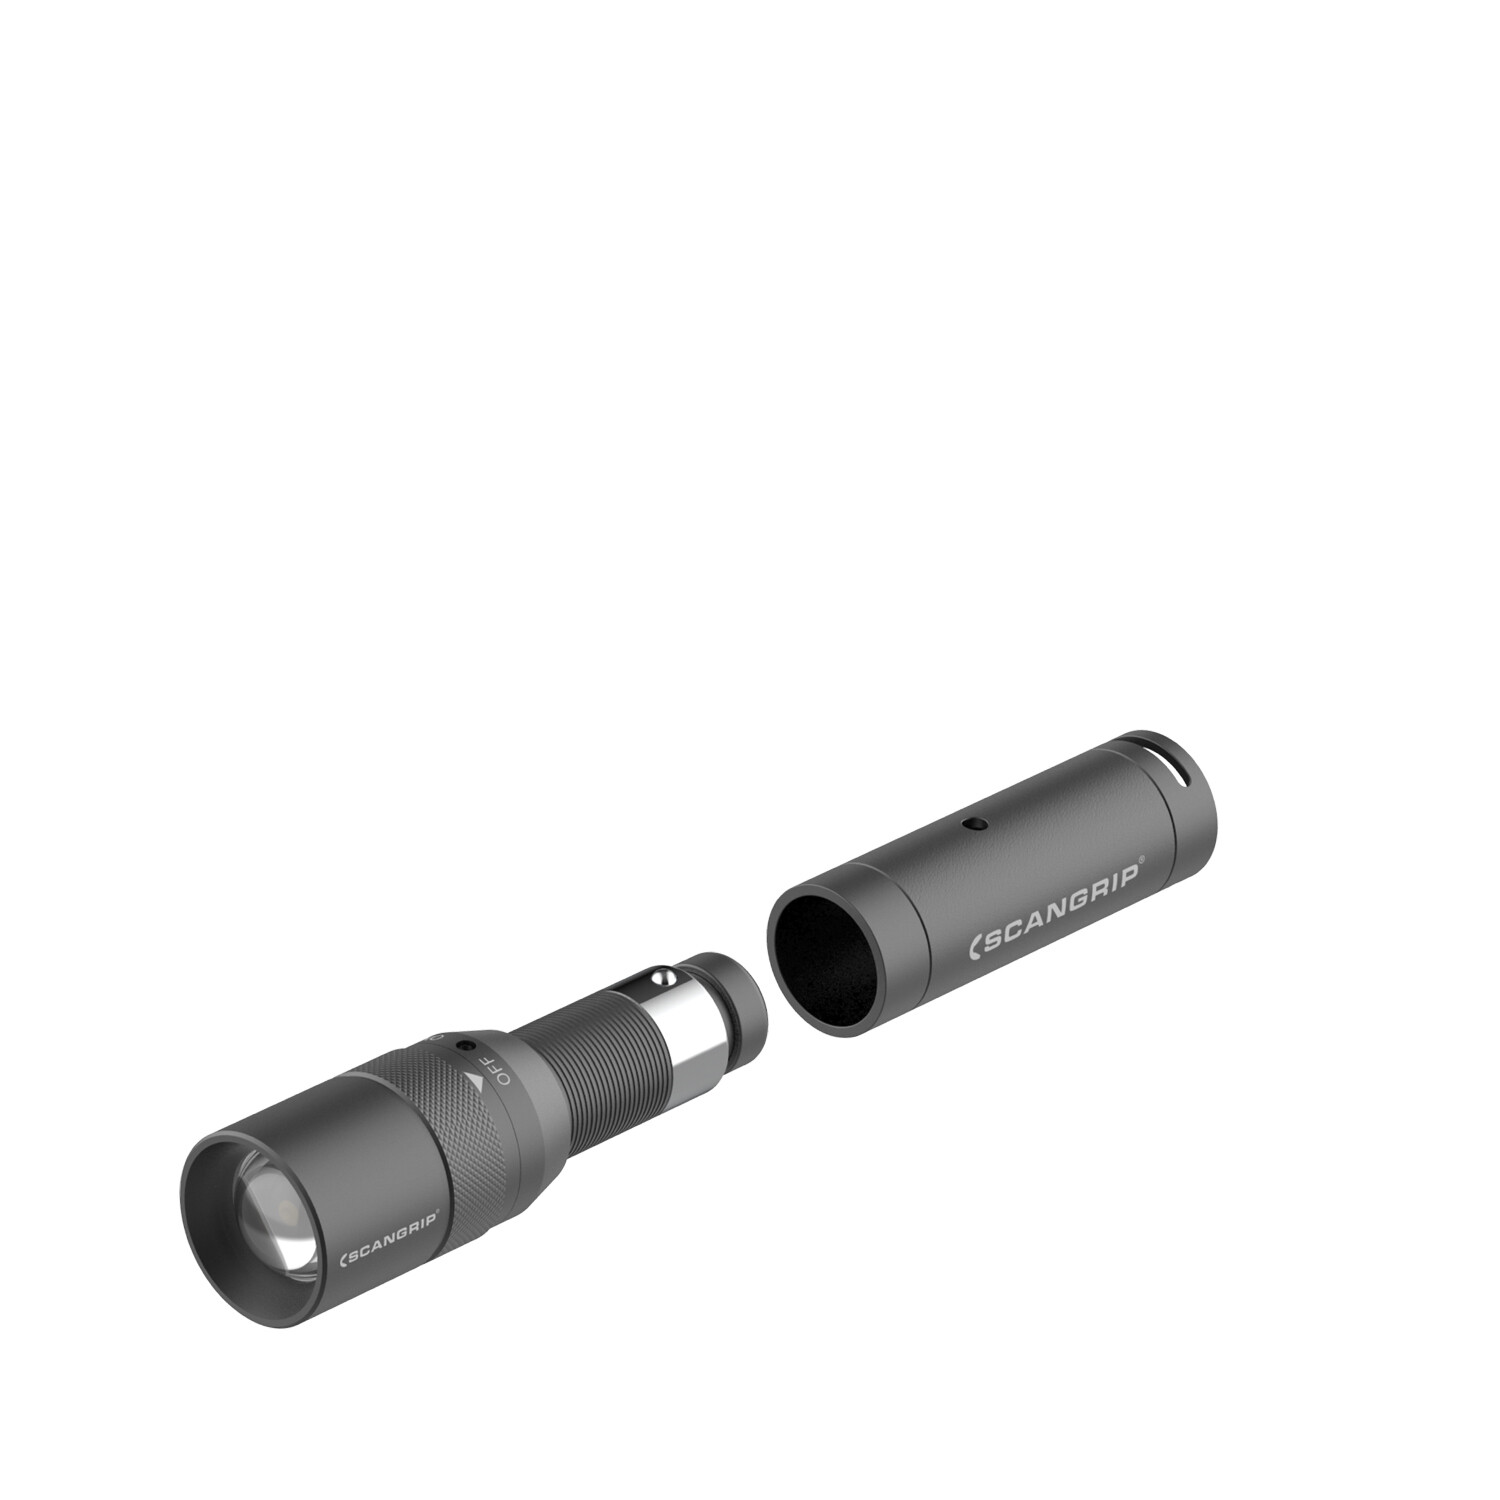 FLASH 12V Small rechargeable LED flashlight